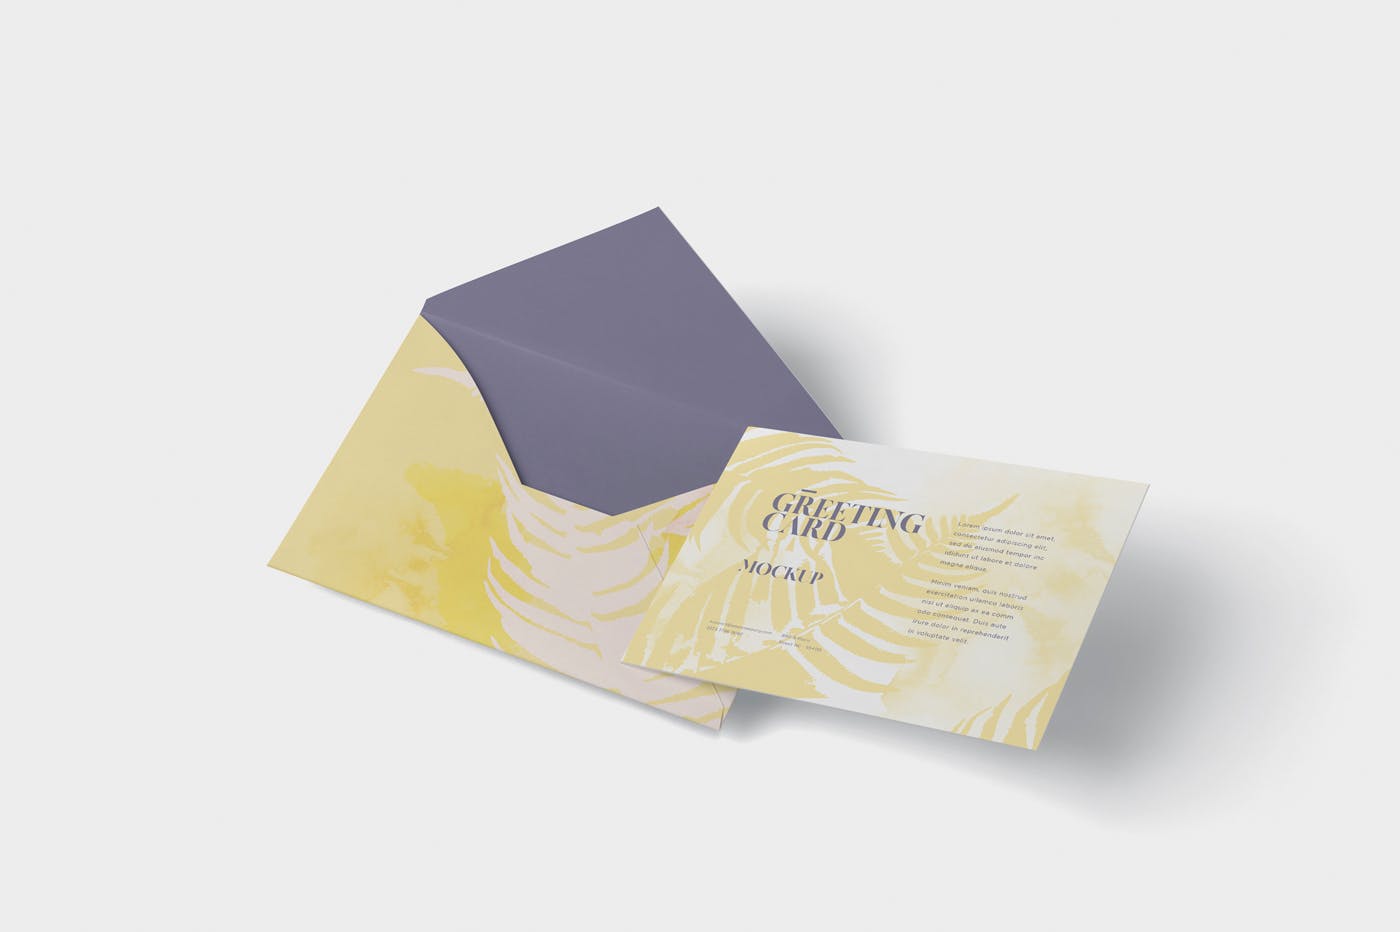 高端企业信封&贺卡设计图蚂蚁素材精选 Greeting Card Mockup with Envelope – A6 Size插图(4)